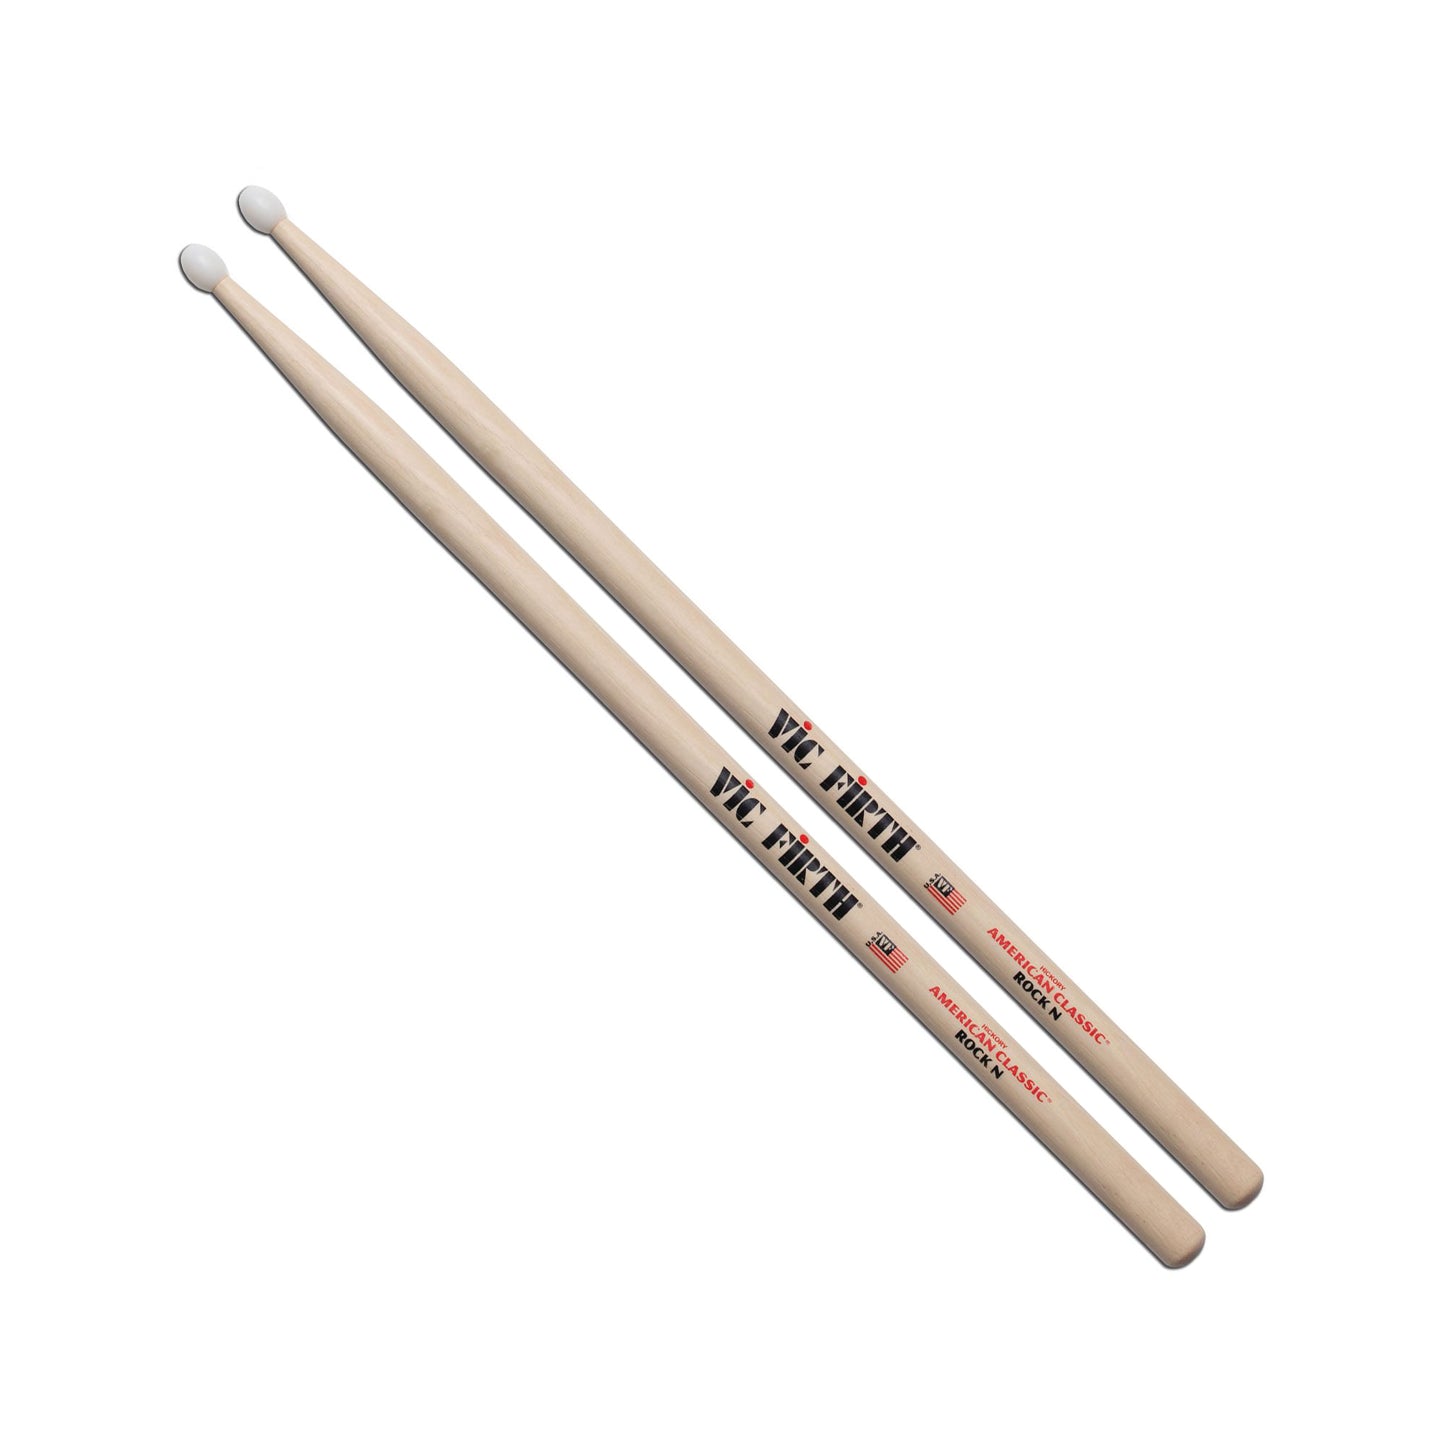 American Classic® Rock Nylon Drumsticks